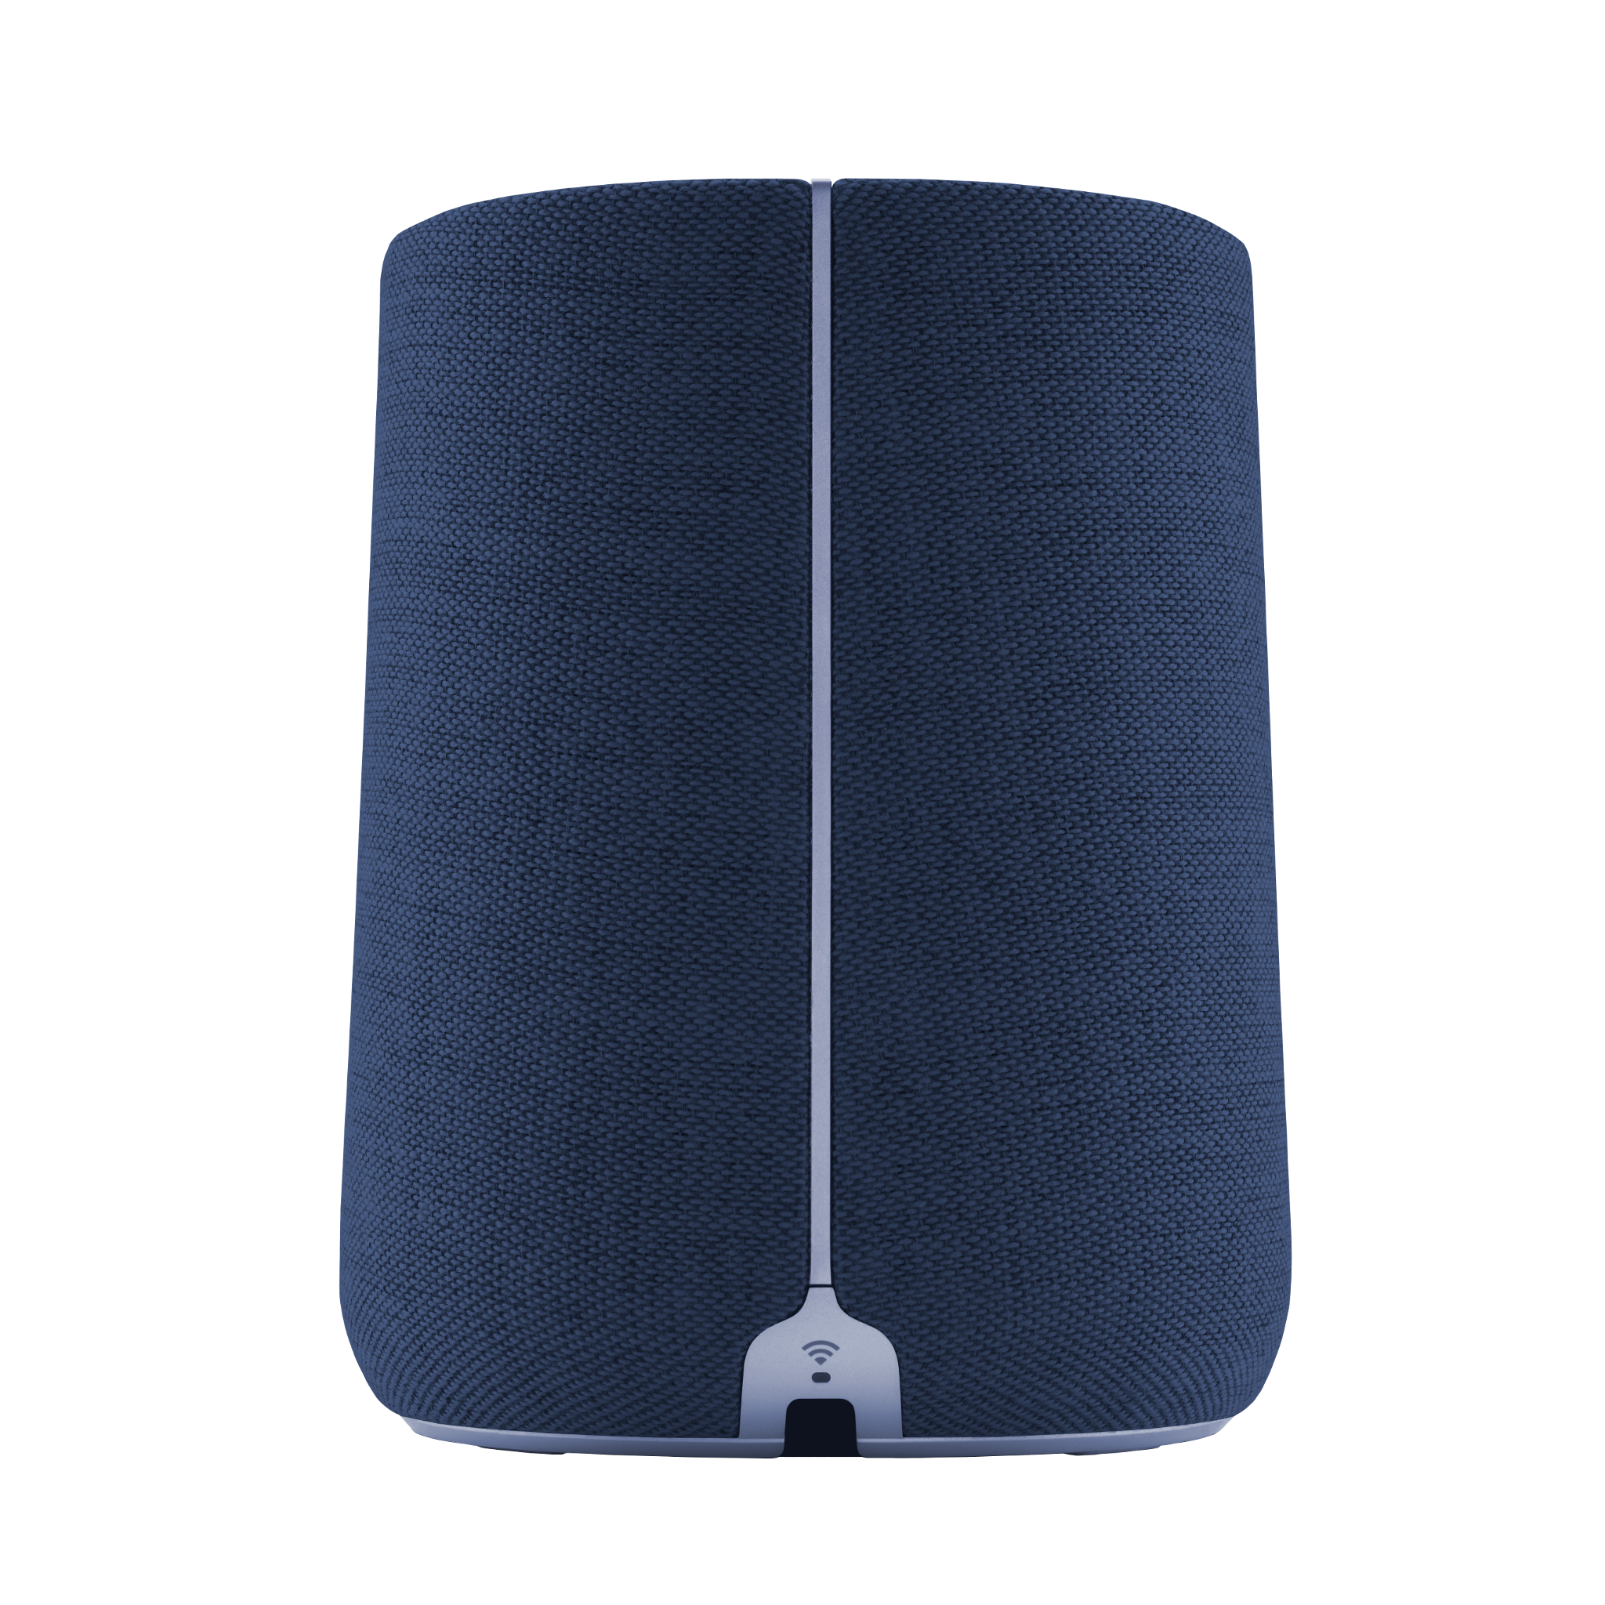 Harman Kardon Citation One MKII - Blue - All-in-one smart speaker with room-filling sound - Back